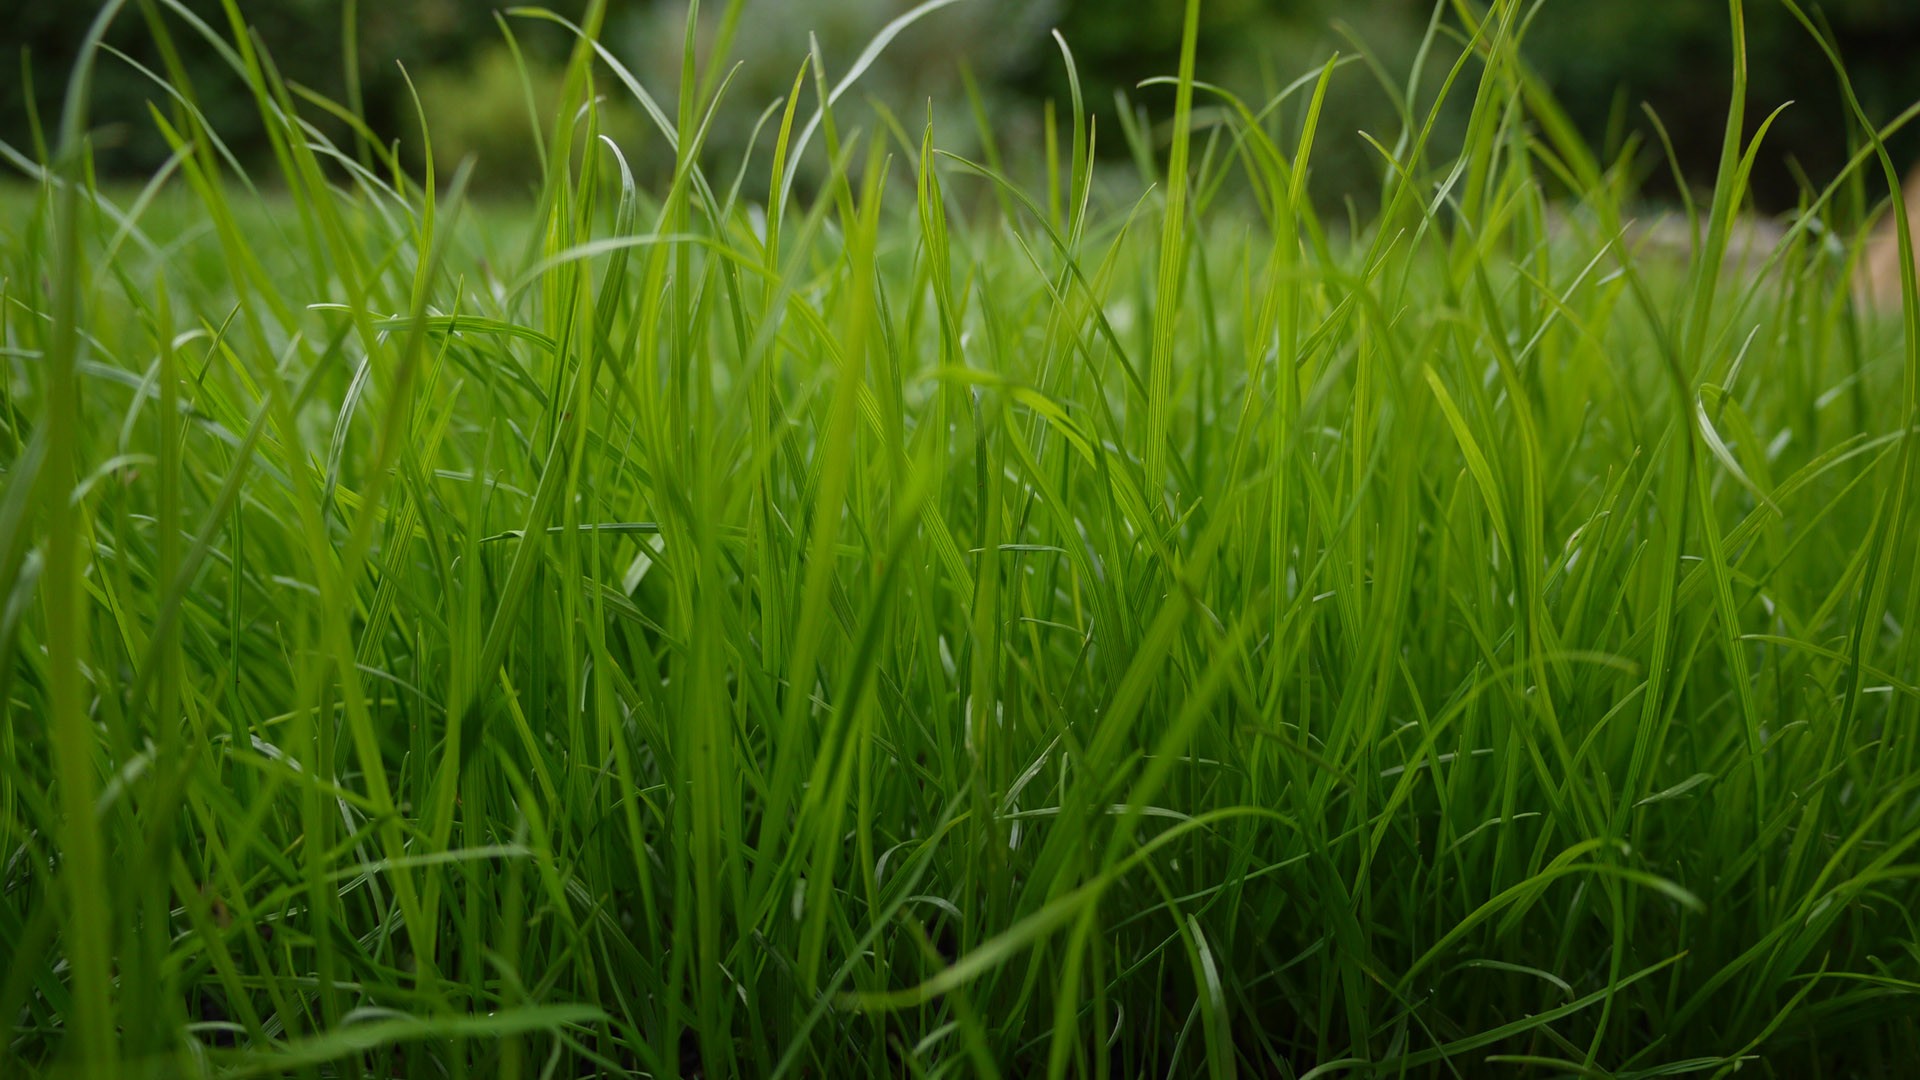 General 1920x1080 grass plants outdoors